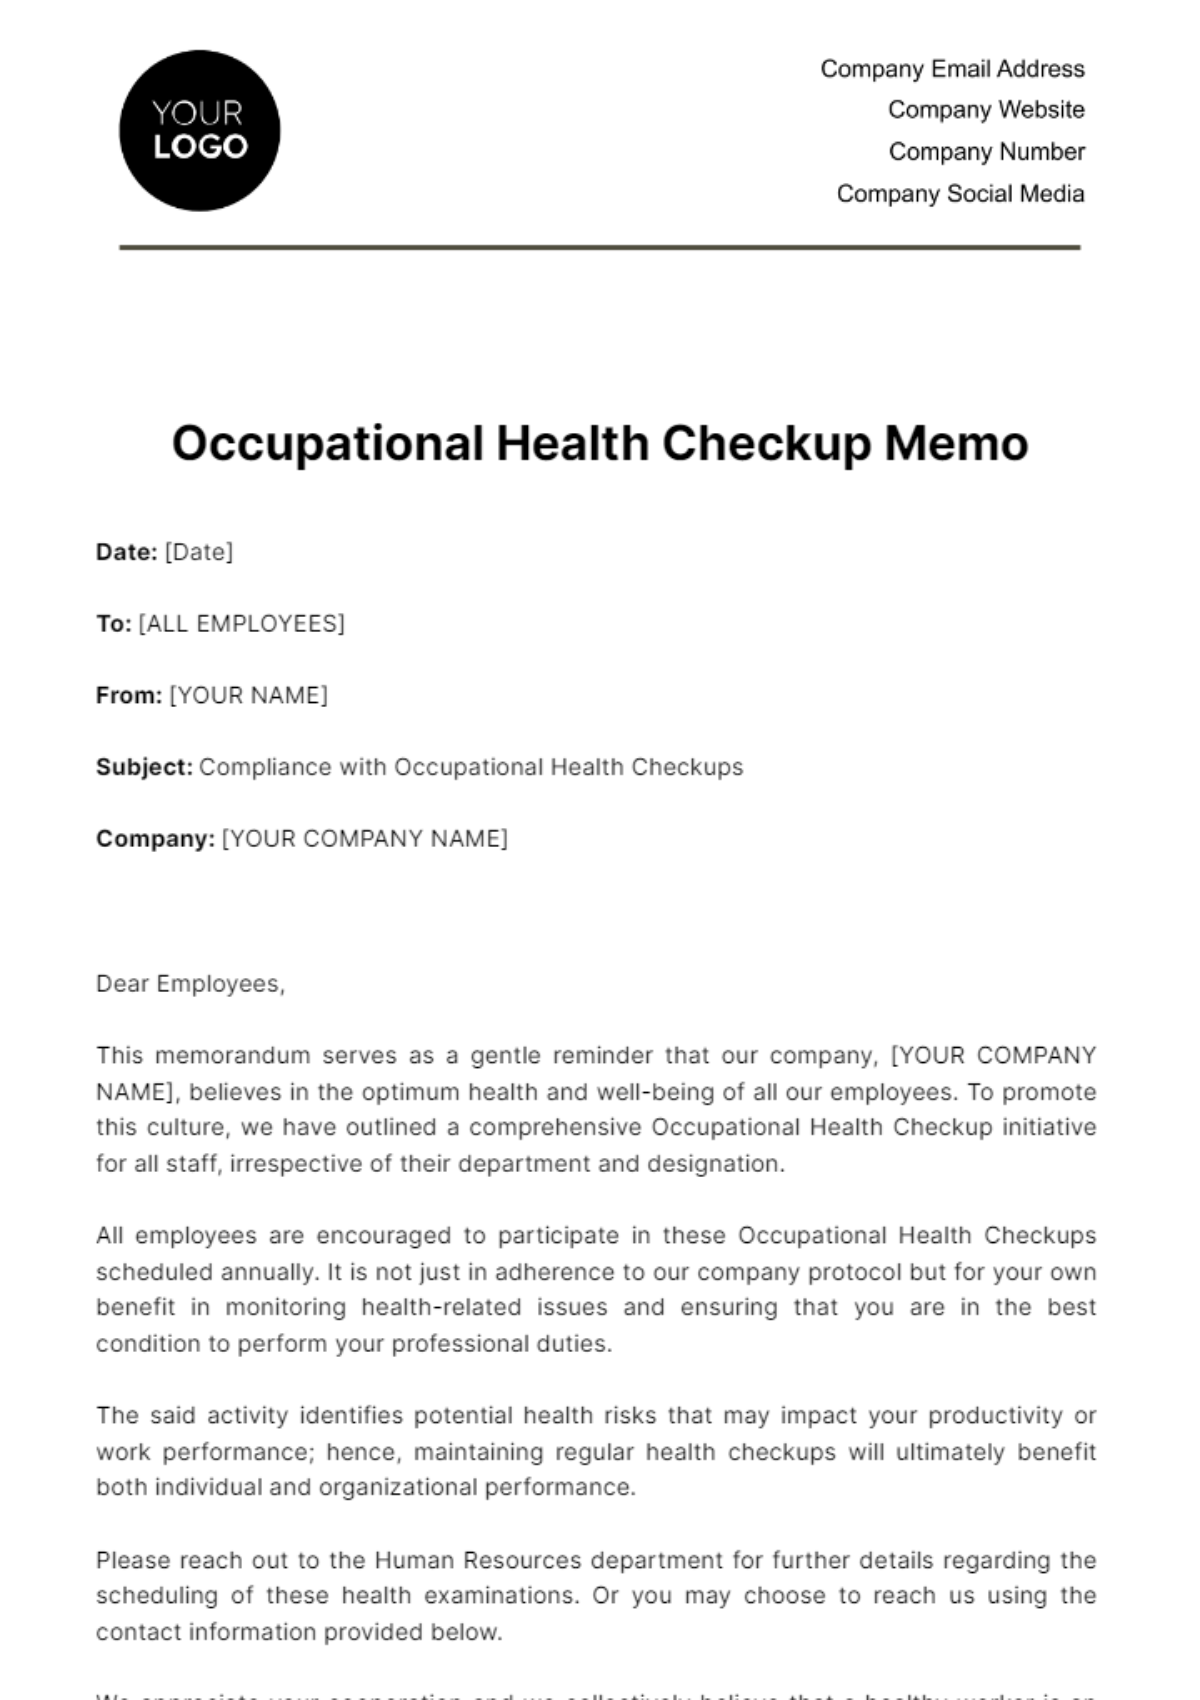 Free Occupational Health Checkup Memo HR Template